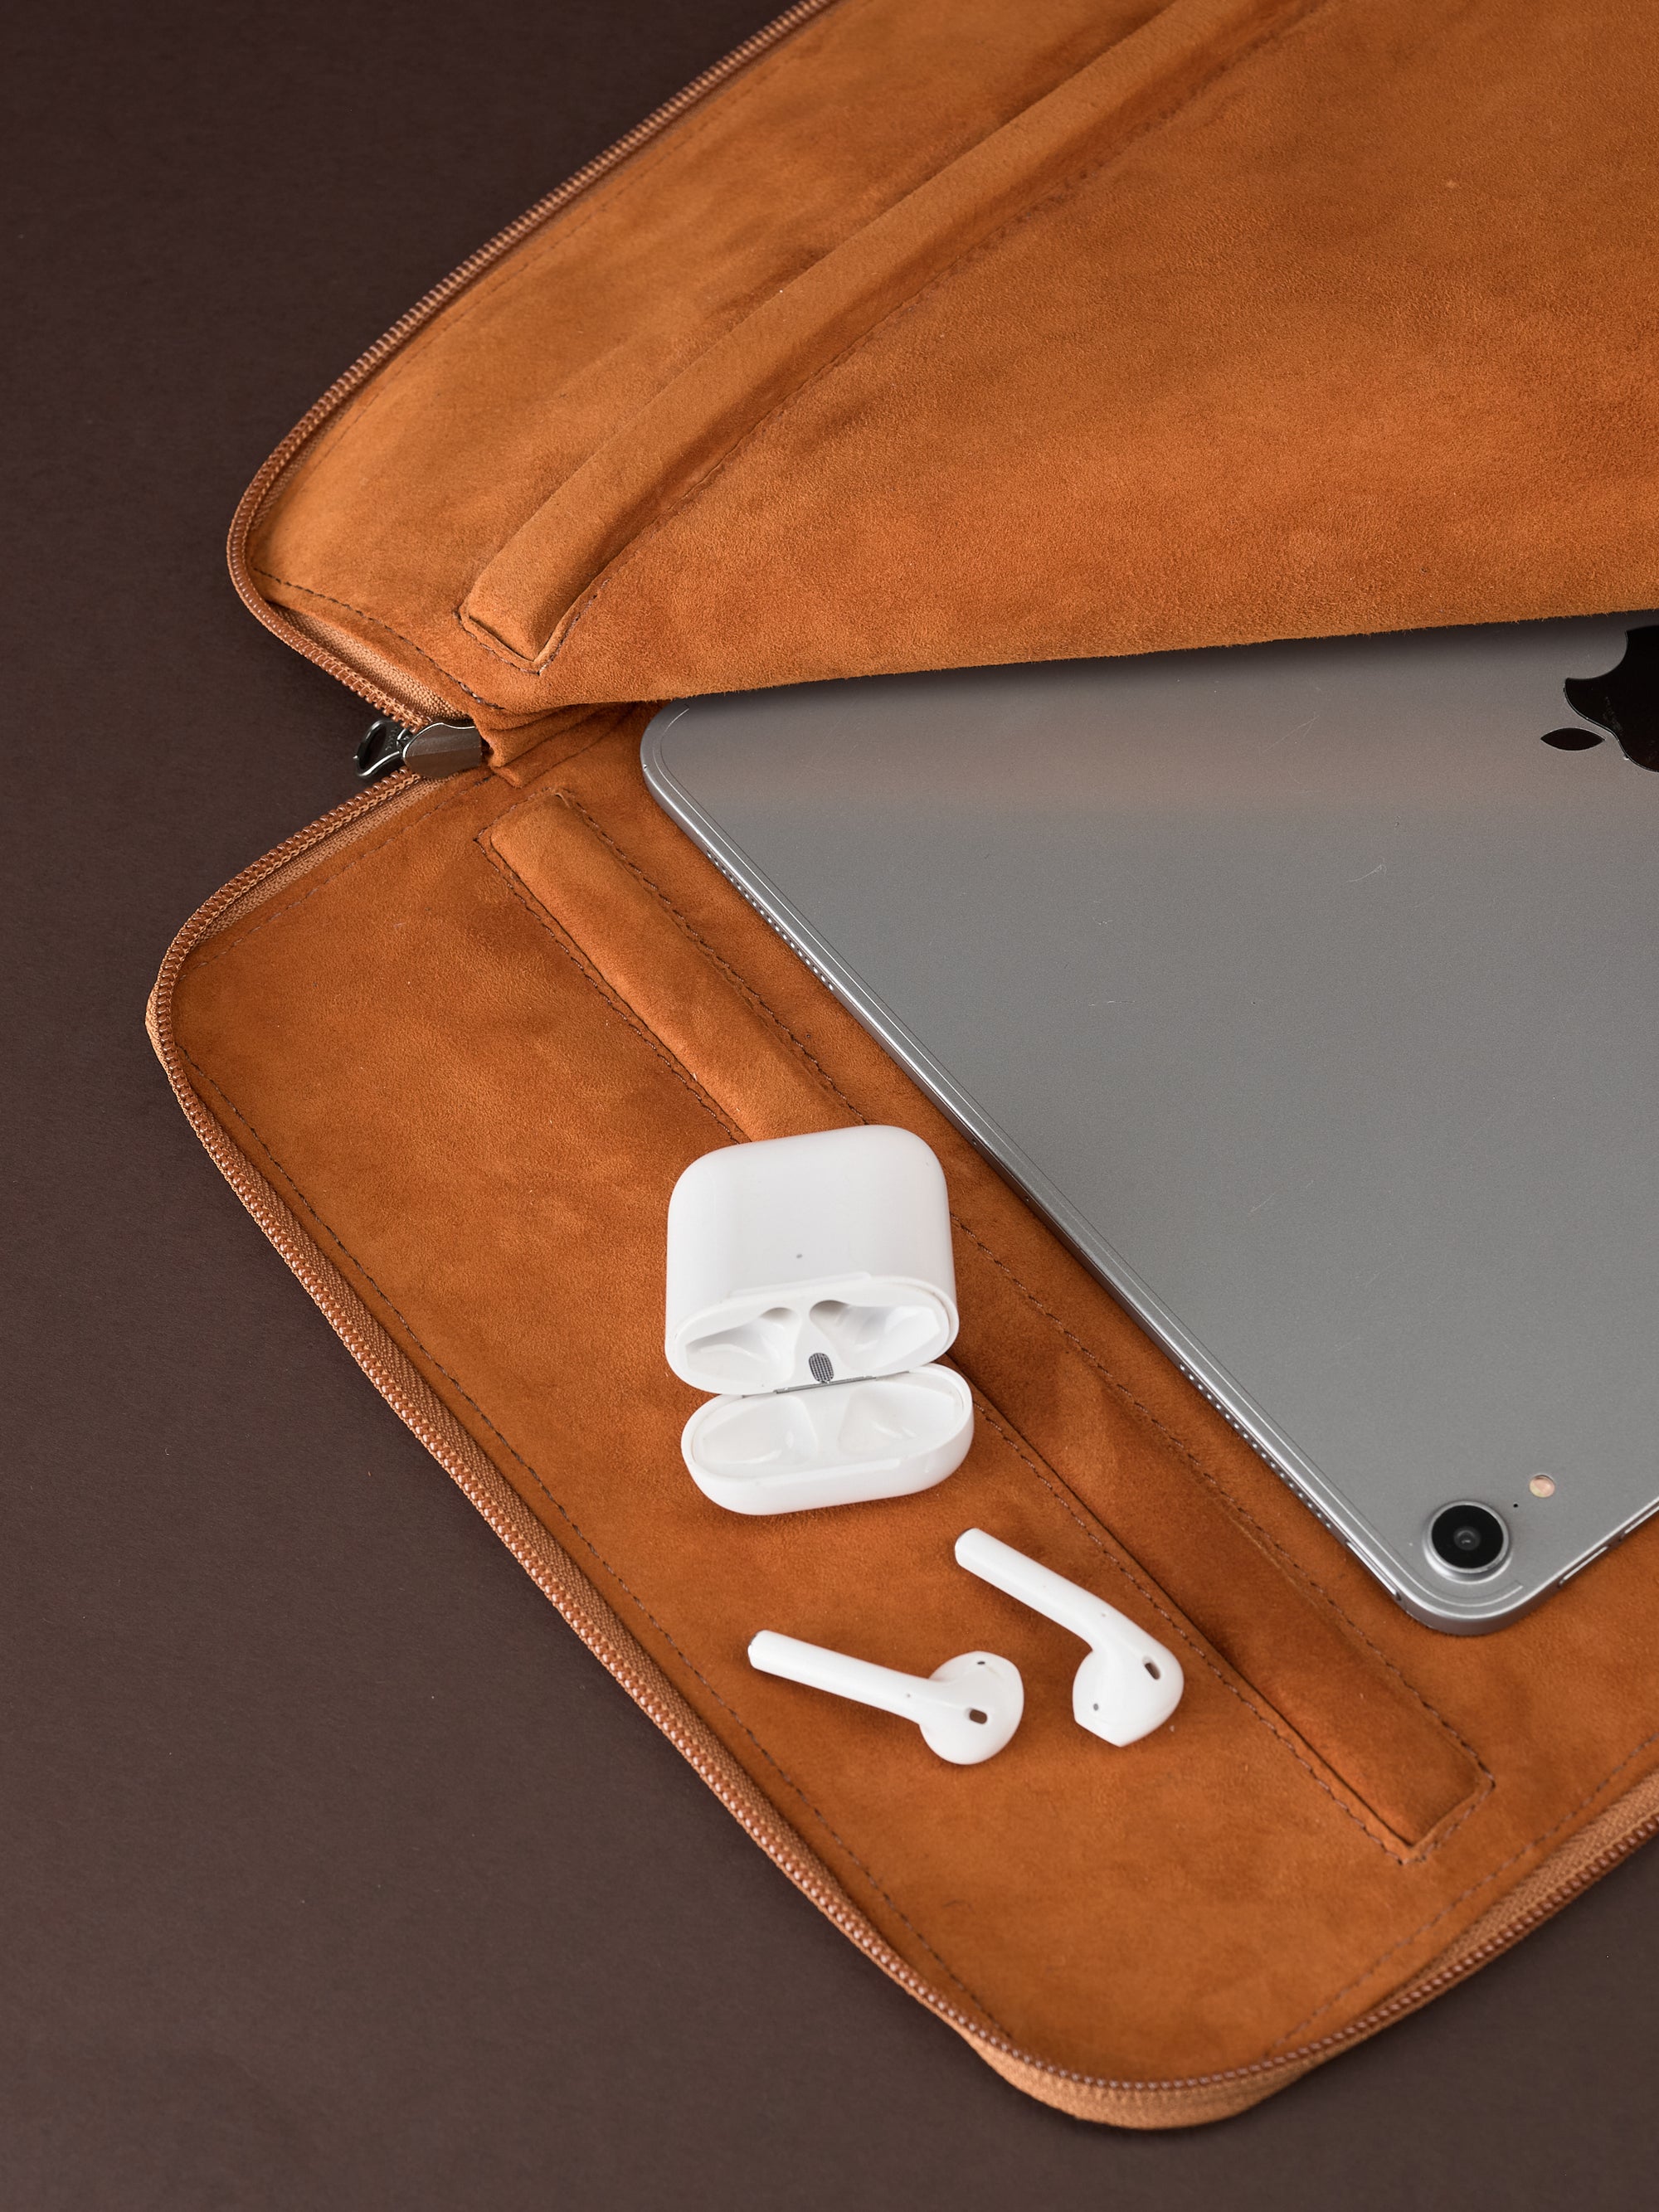 Suede interior. Draftsman 6 iPad Case iPad Pro 11-inch, iPad Pro 12.9 Case by Capra Leather